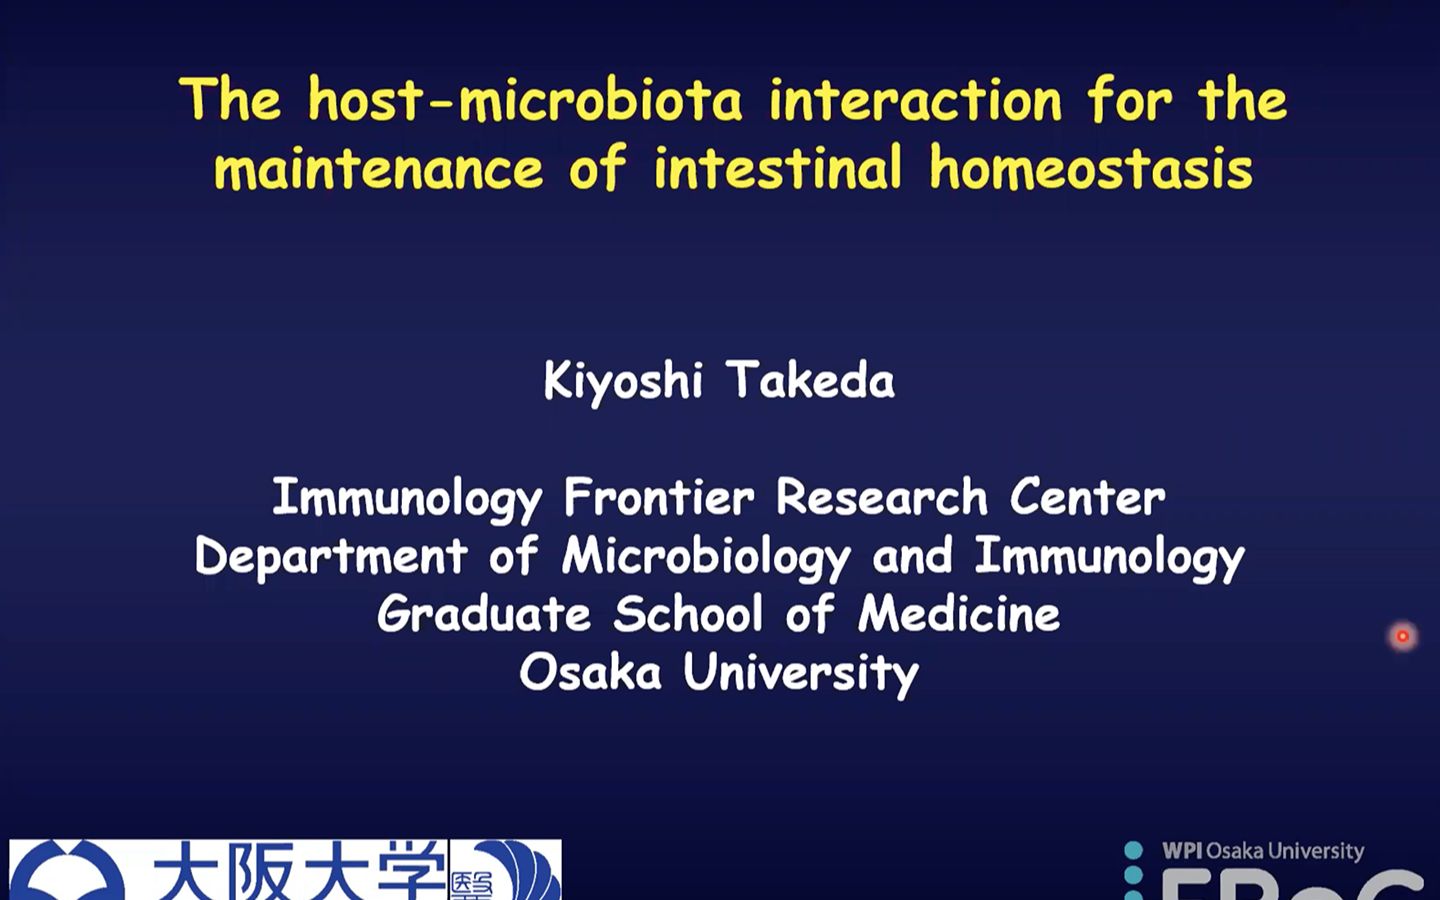 The host-microbiota interaction for the maintenance of intestinal homeostasis